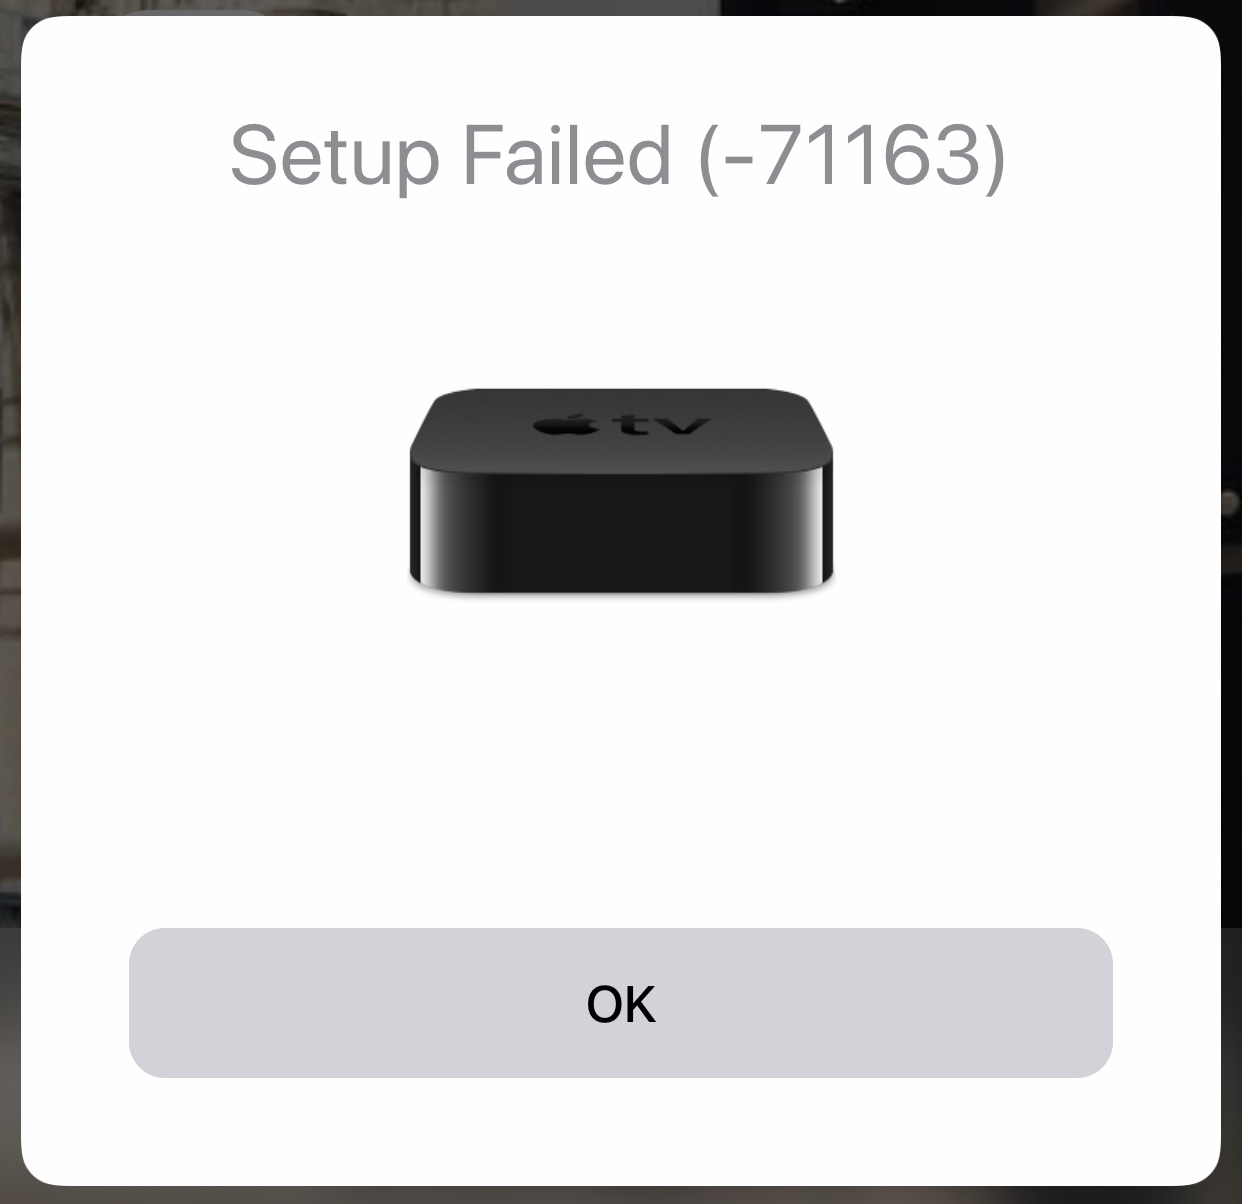 Marine Inca Empire Lil Apple tv airplay 2 setup failed (71163) - Apple Community